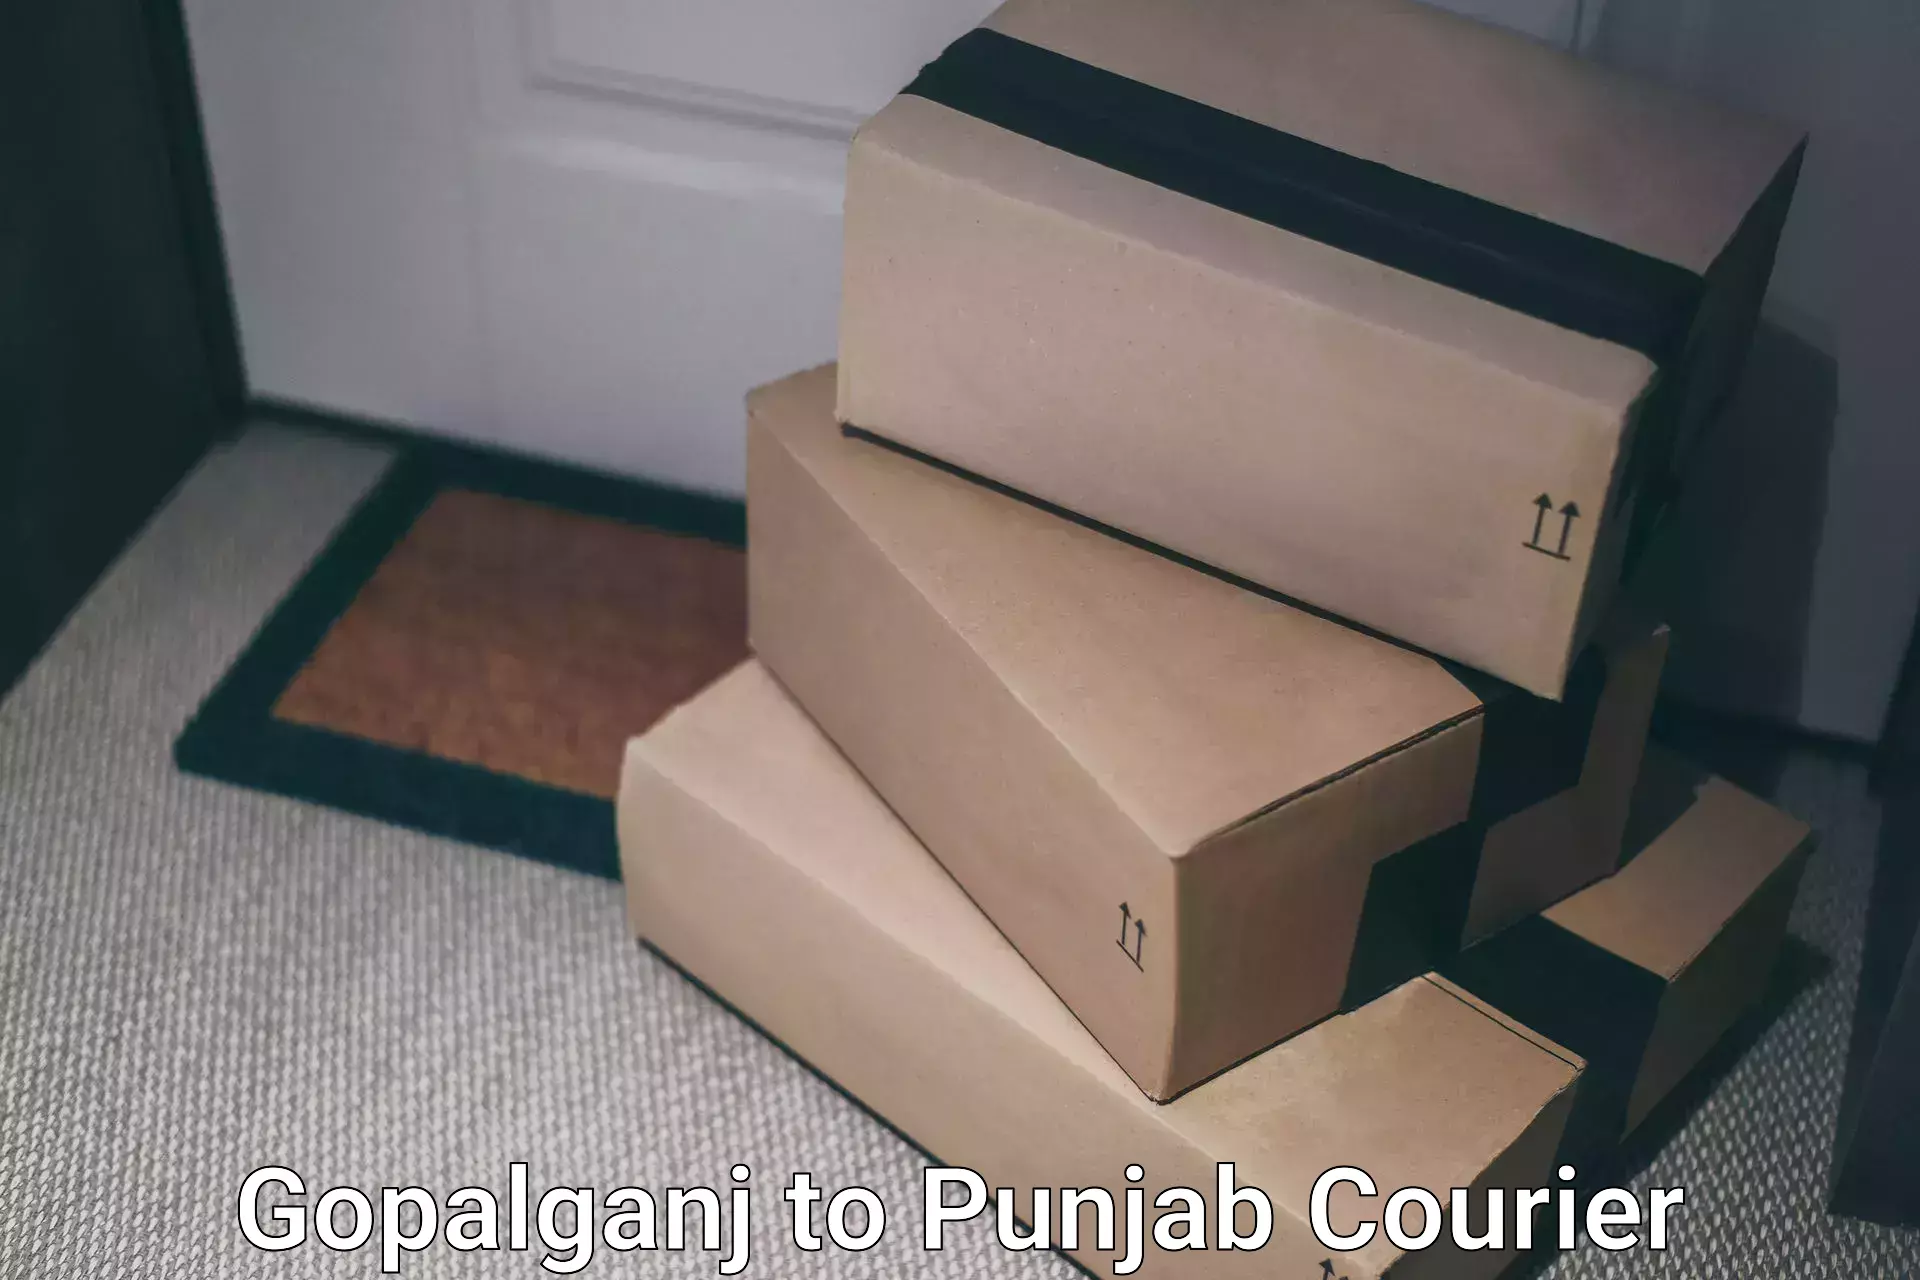 International parcel service Gopalganj to Punjab